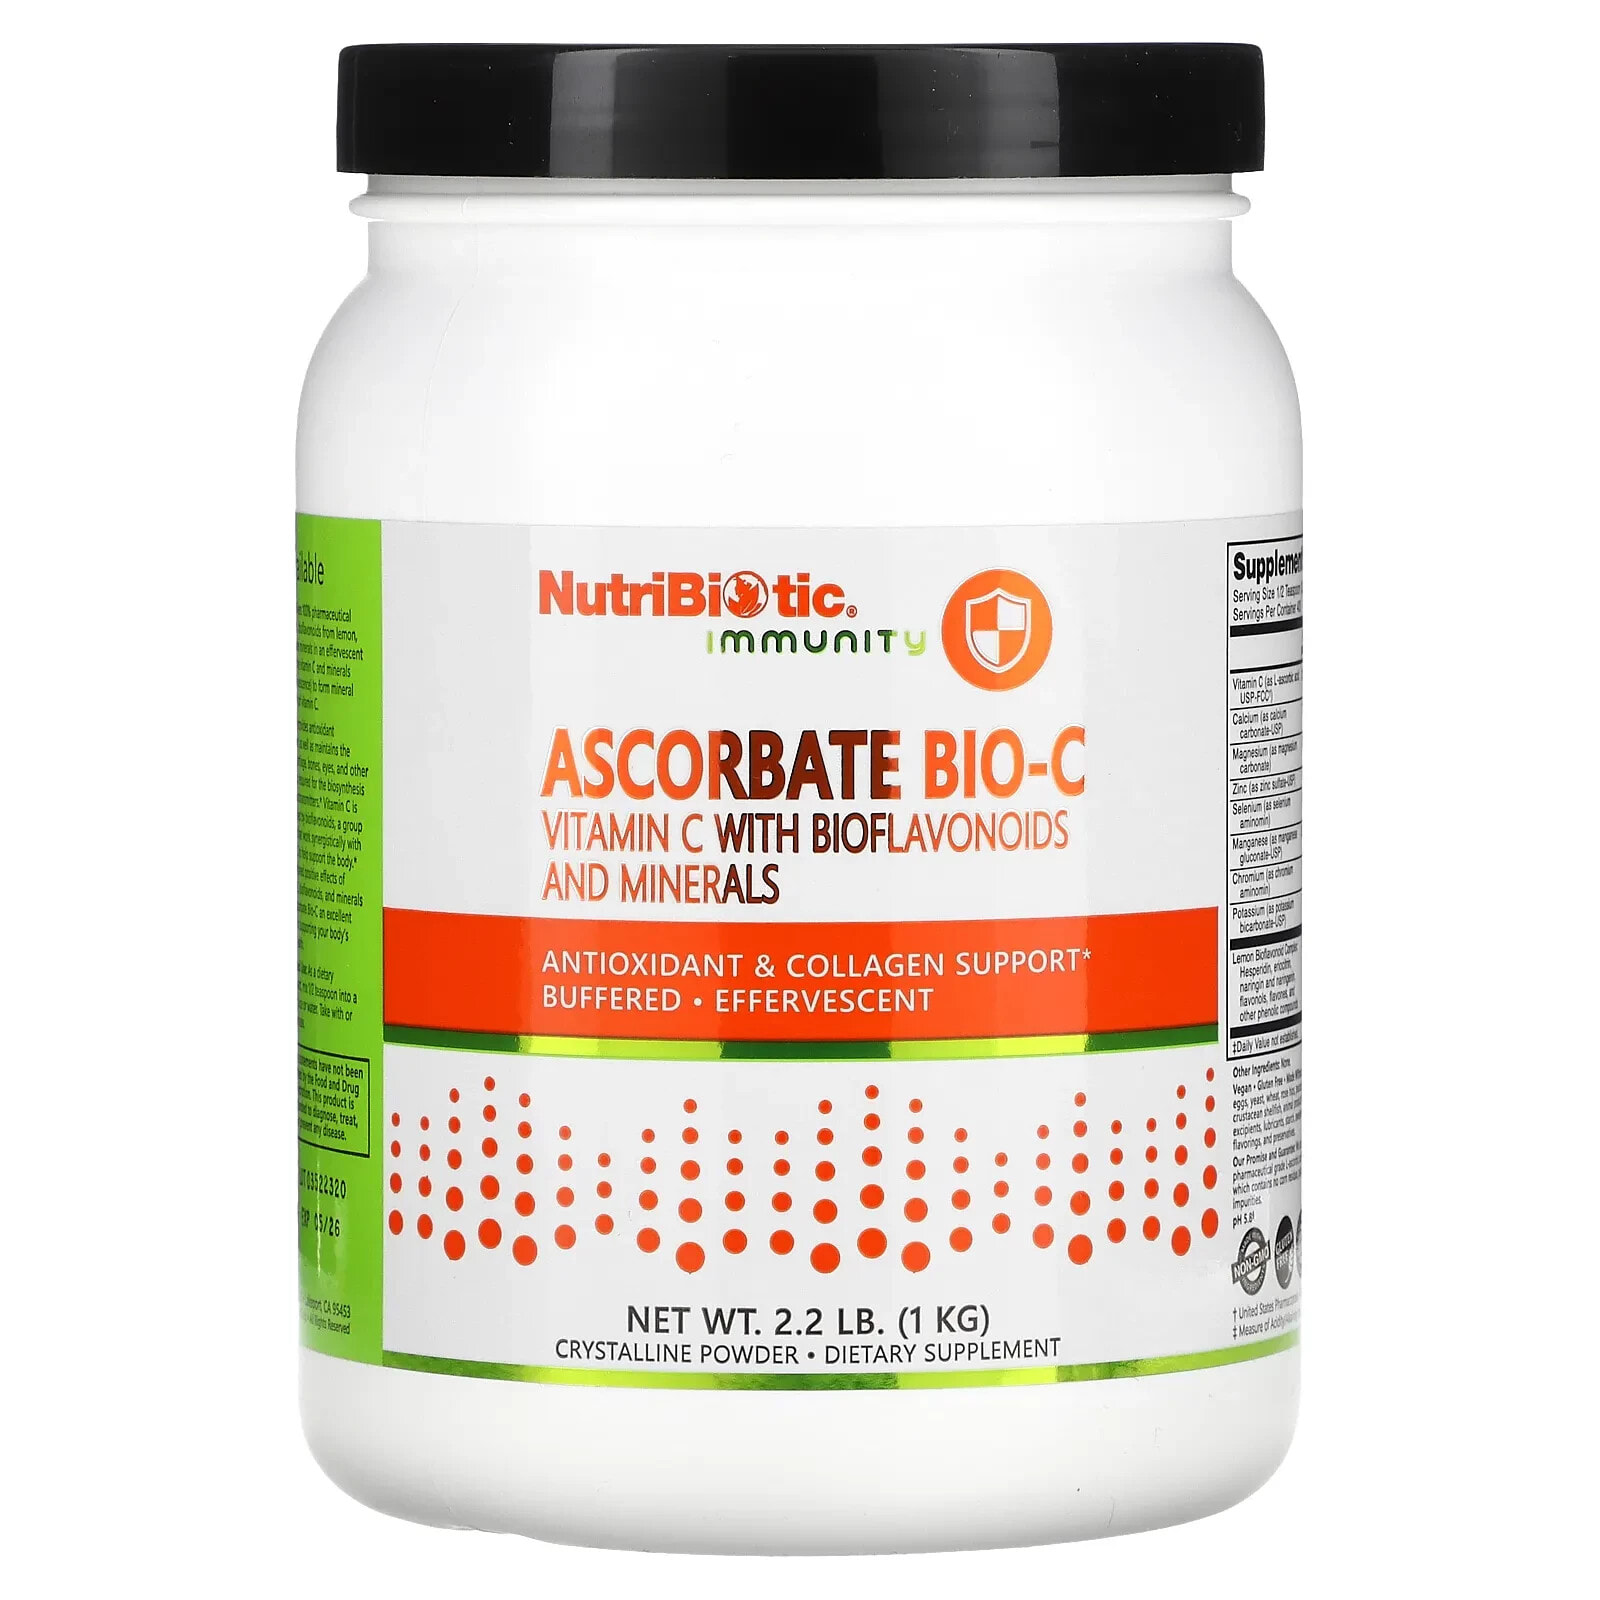 NutriBiotic, Immunity, Ascorbate Bio-C, Vitamin C with Bioflavonoids and Minerals, 16 oz (454 g)